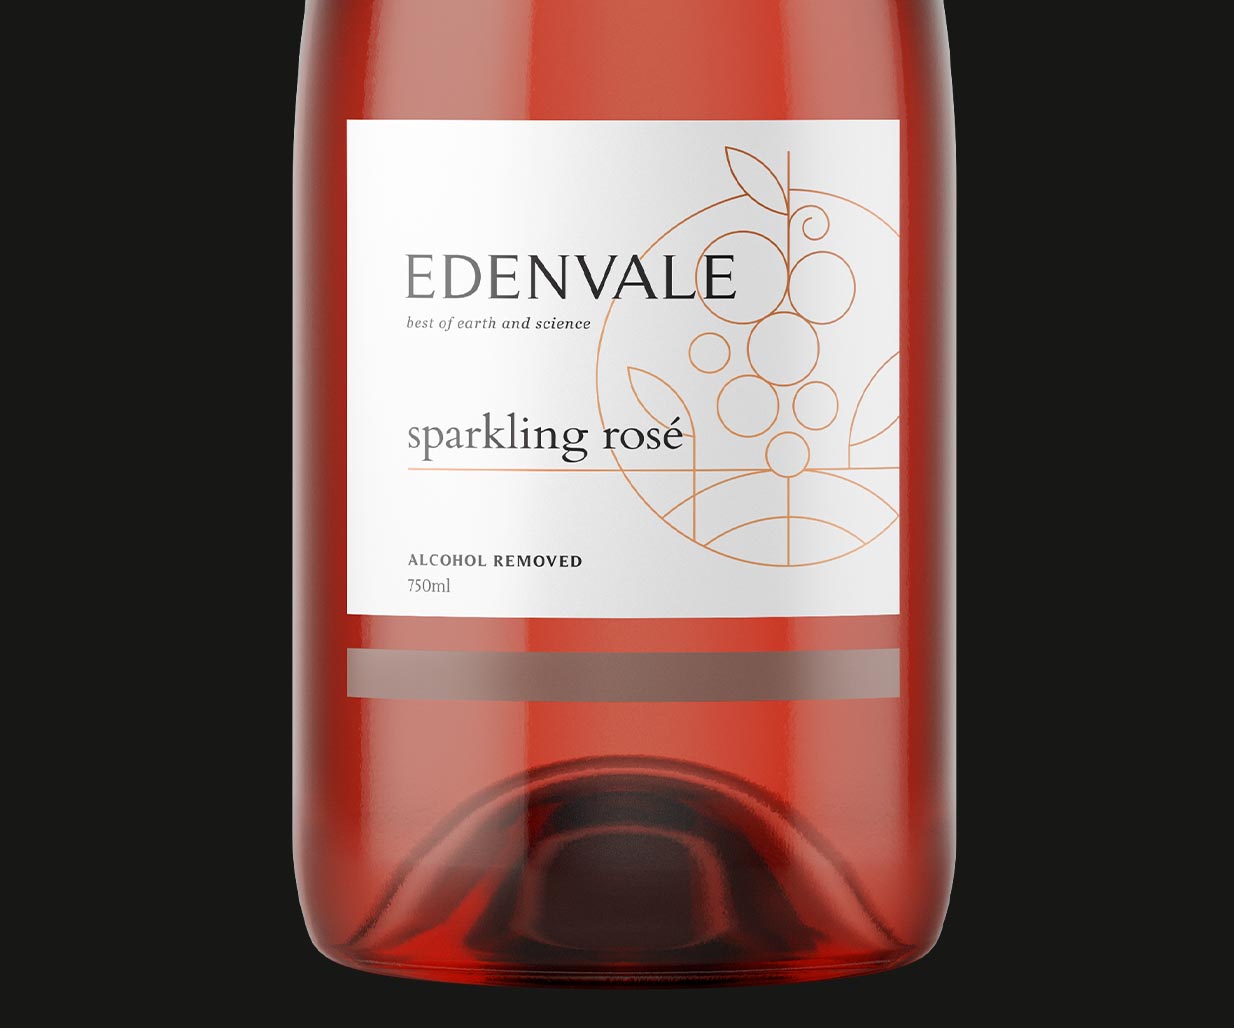 Australian wine label designers, Percept, create branding and packaging design for Edenvale, project image H